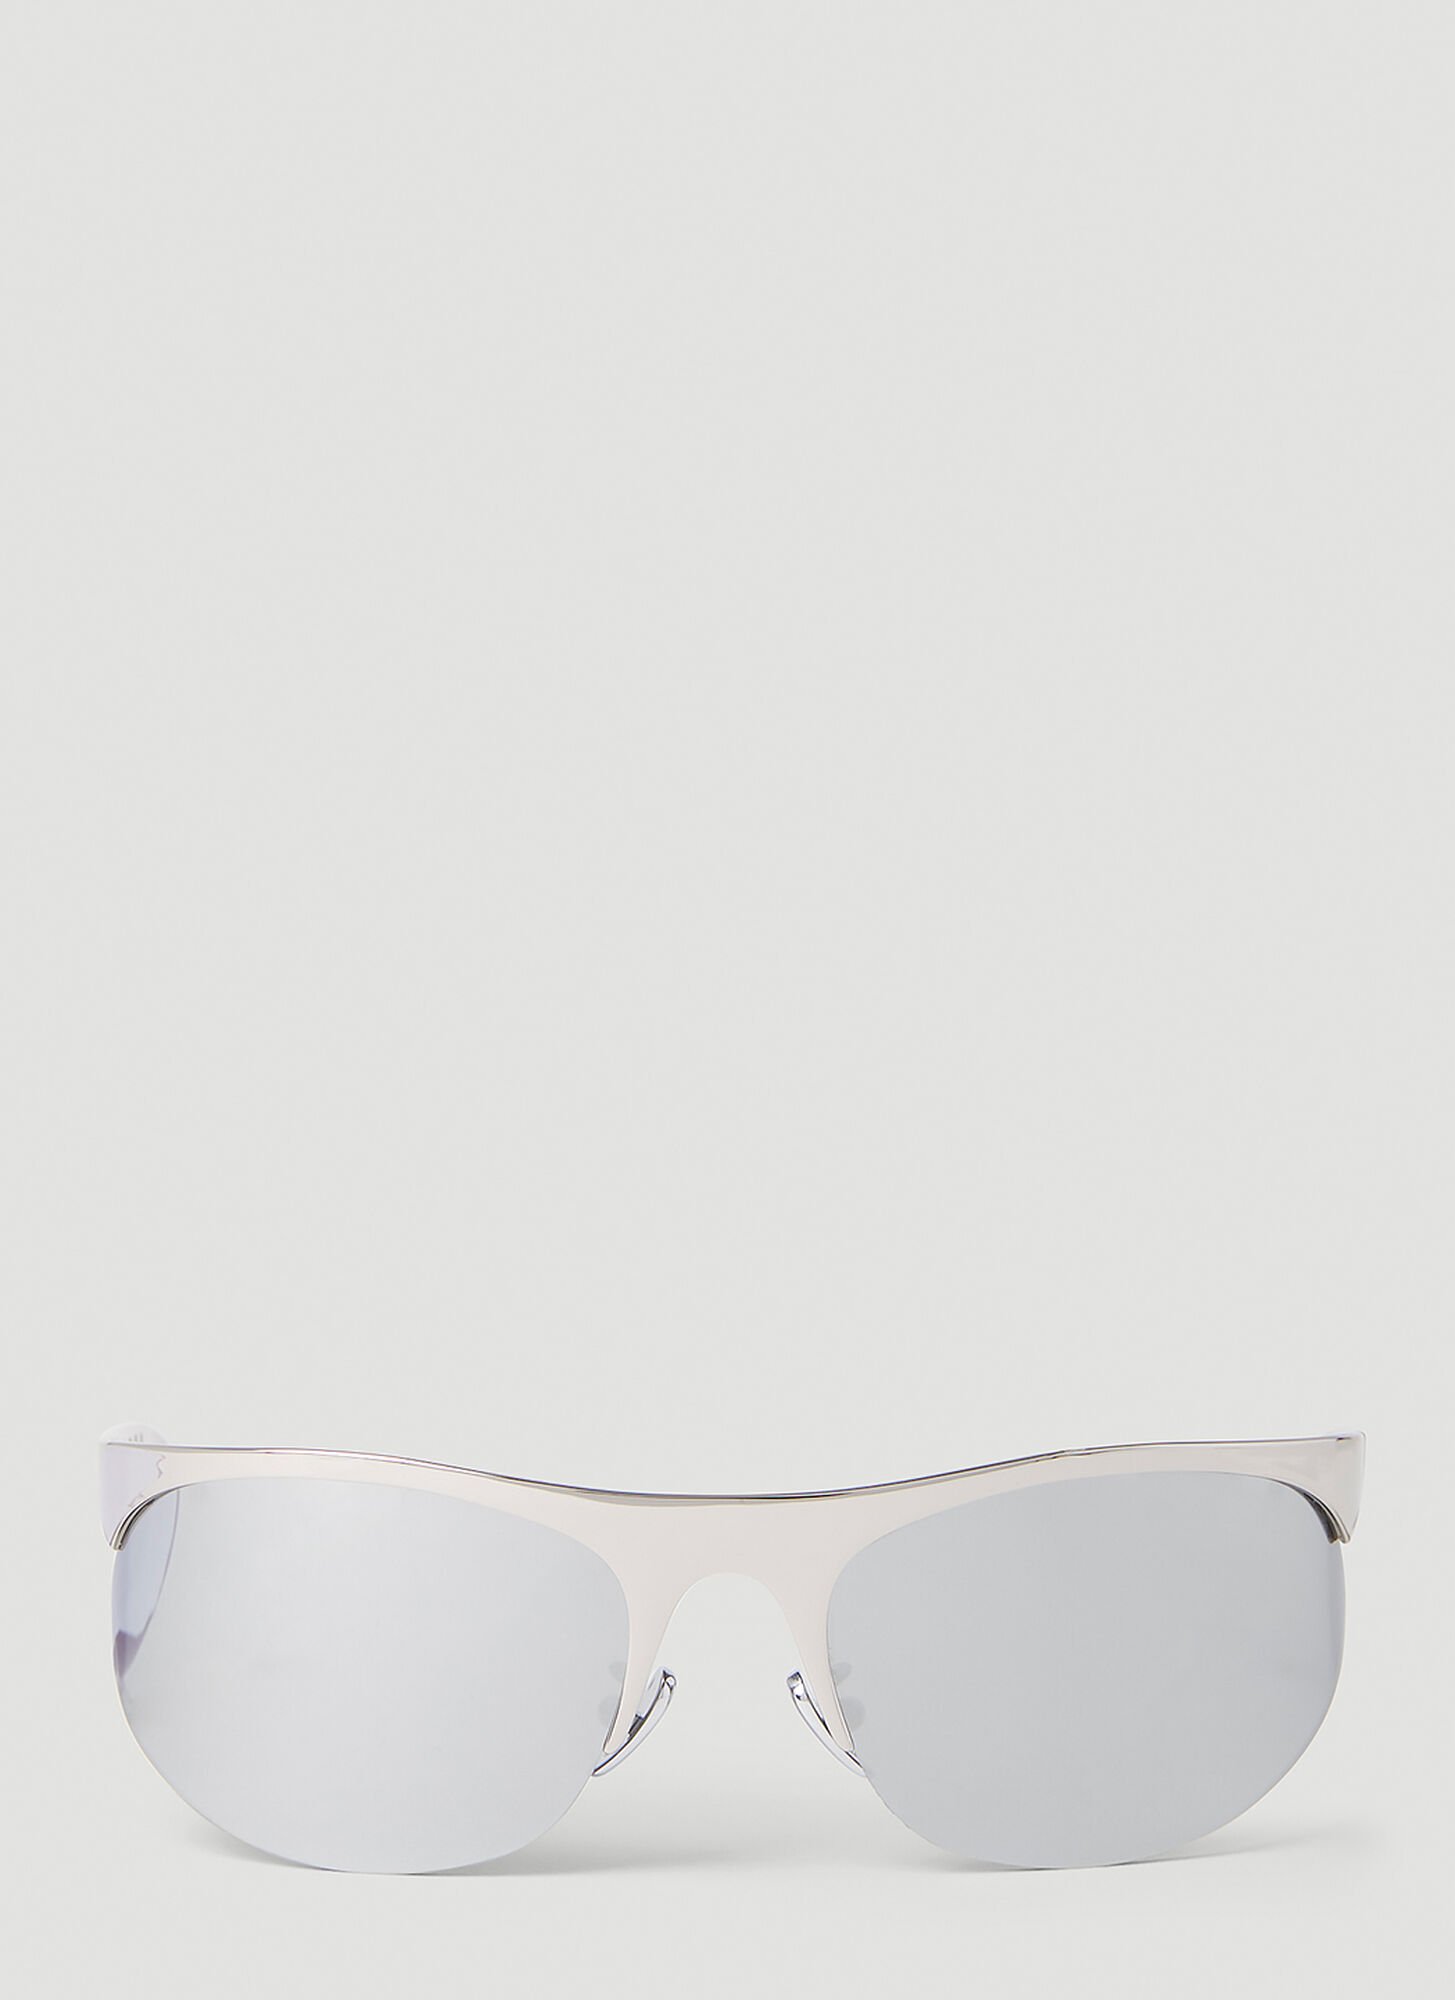 Marni Salar De Uyuni Sunglasses In Silver